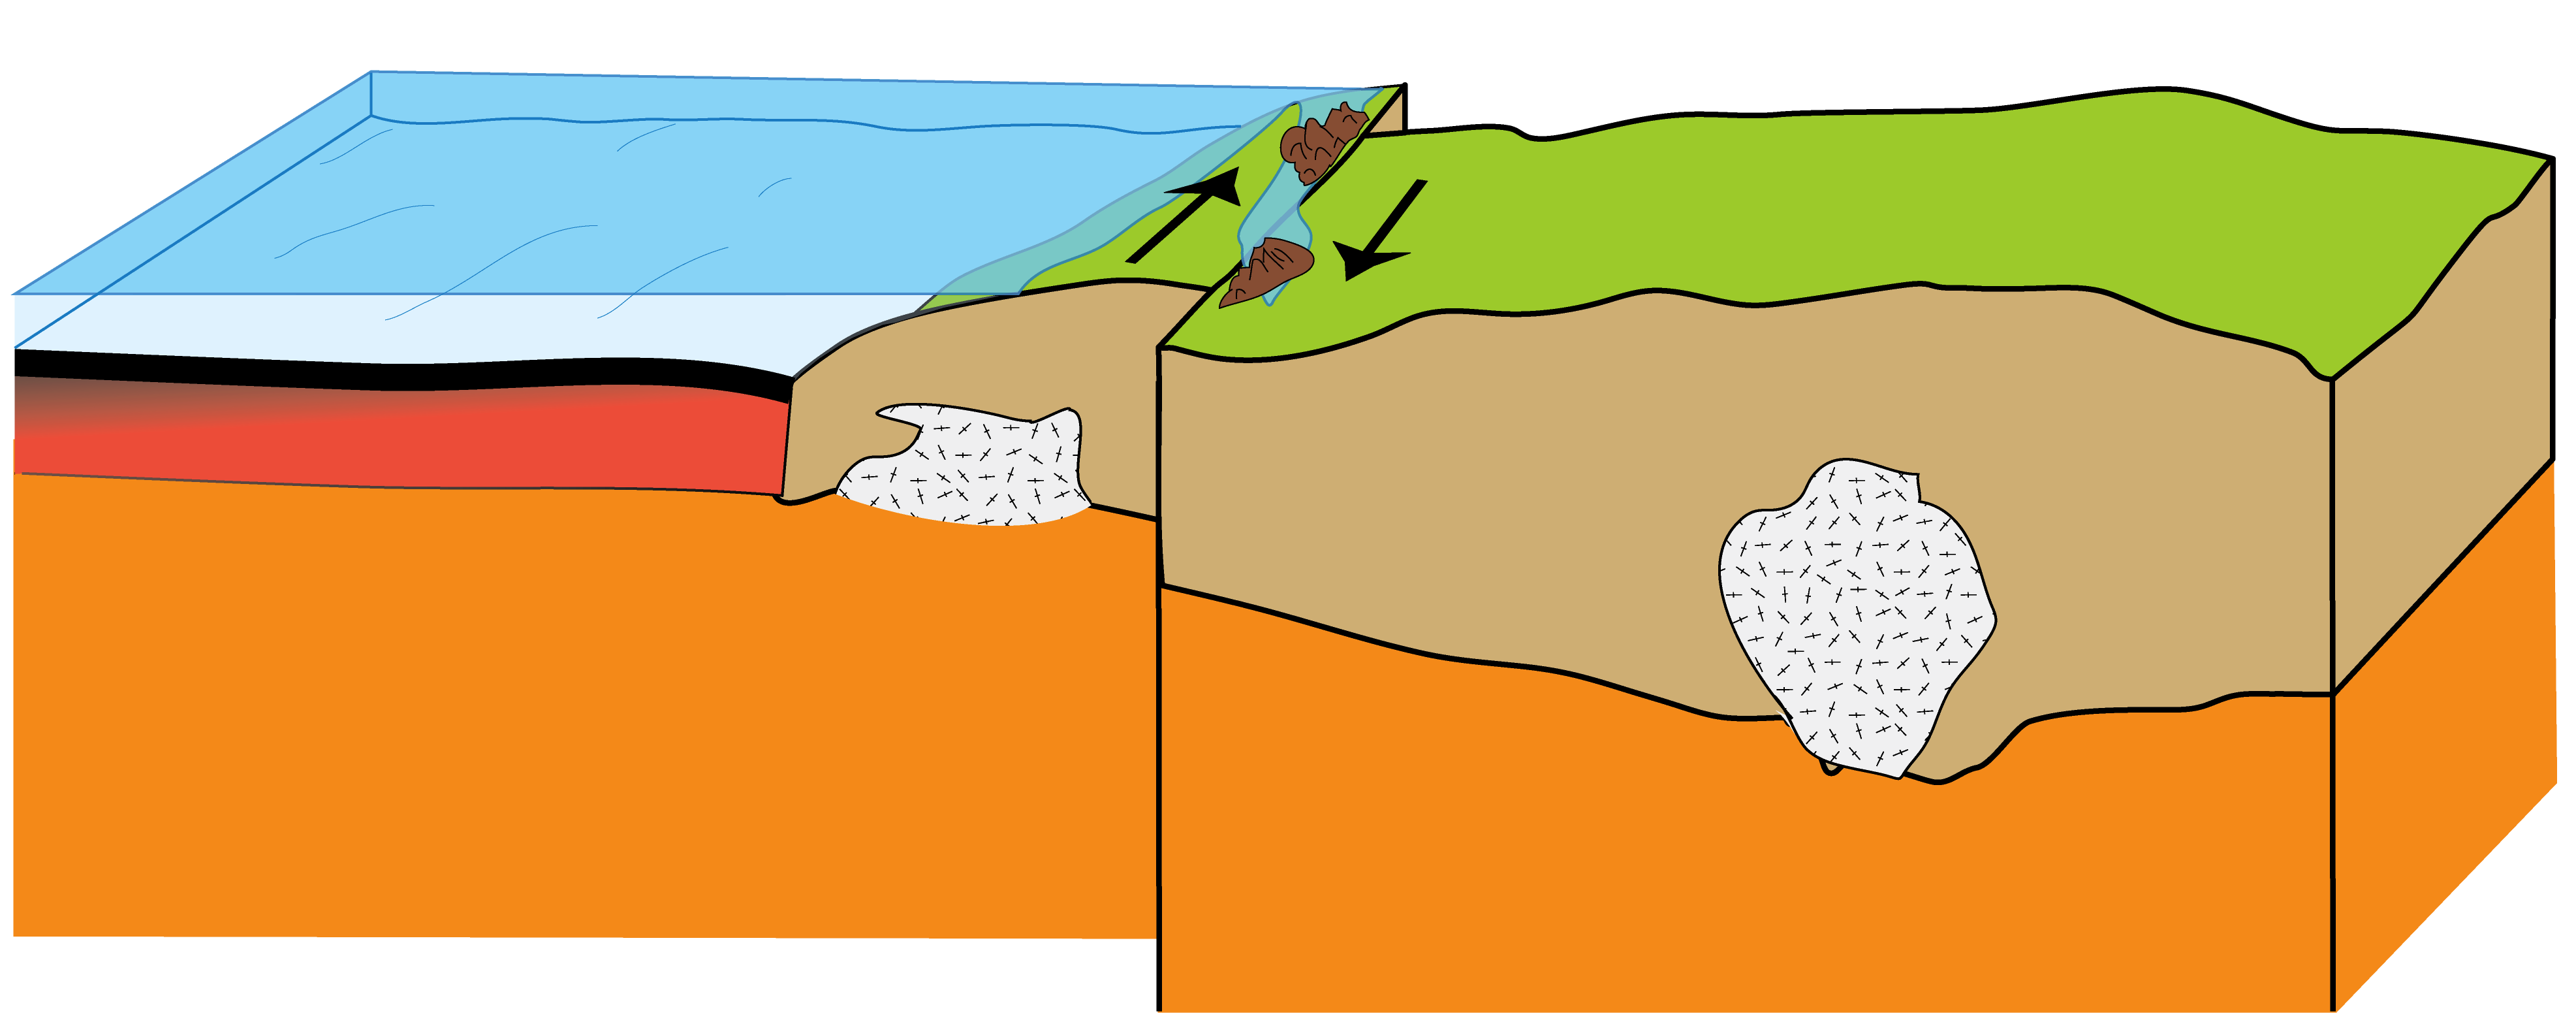 Geology pinnacles national park. Clipart lake volcano crater